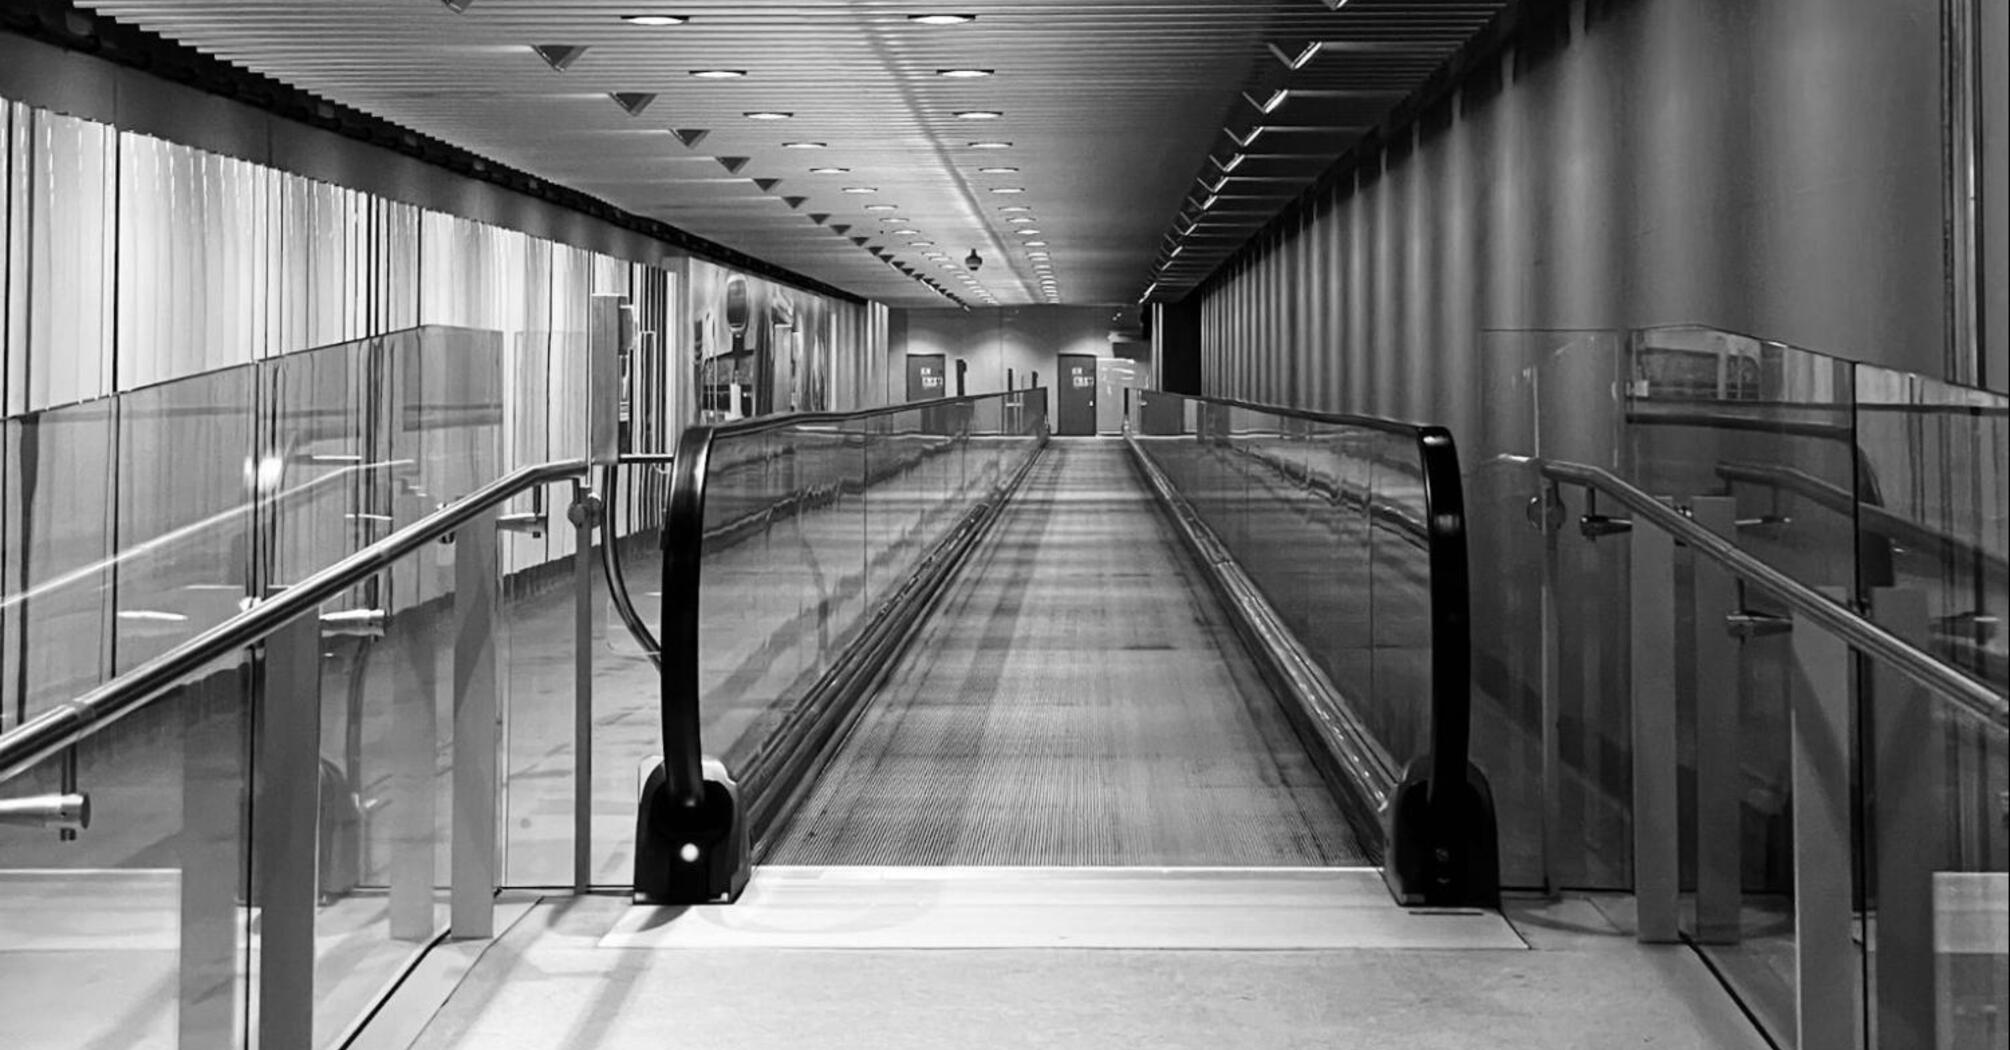 Empty Heathrow airport moving walkway in a modern corridor